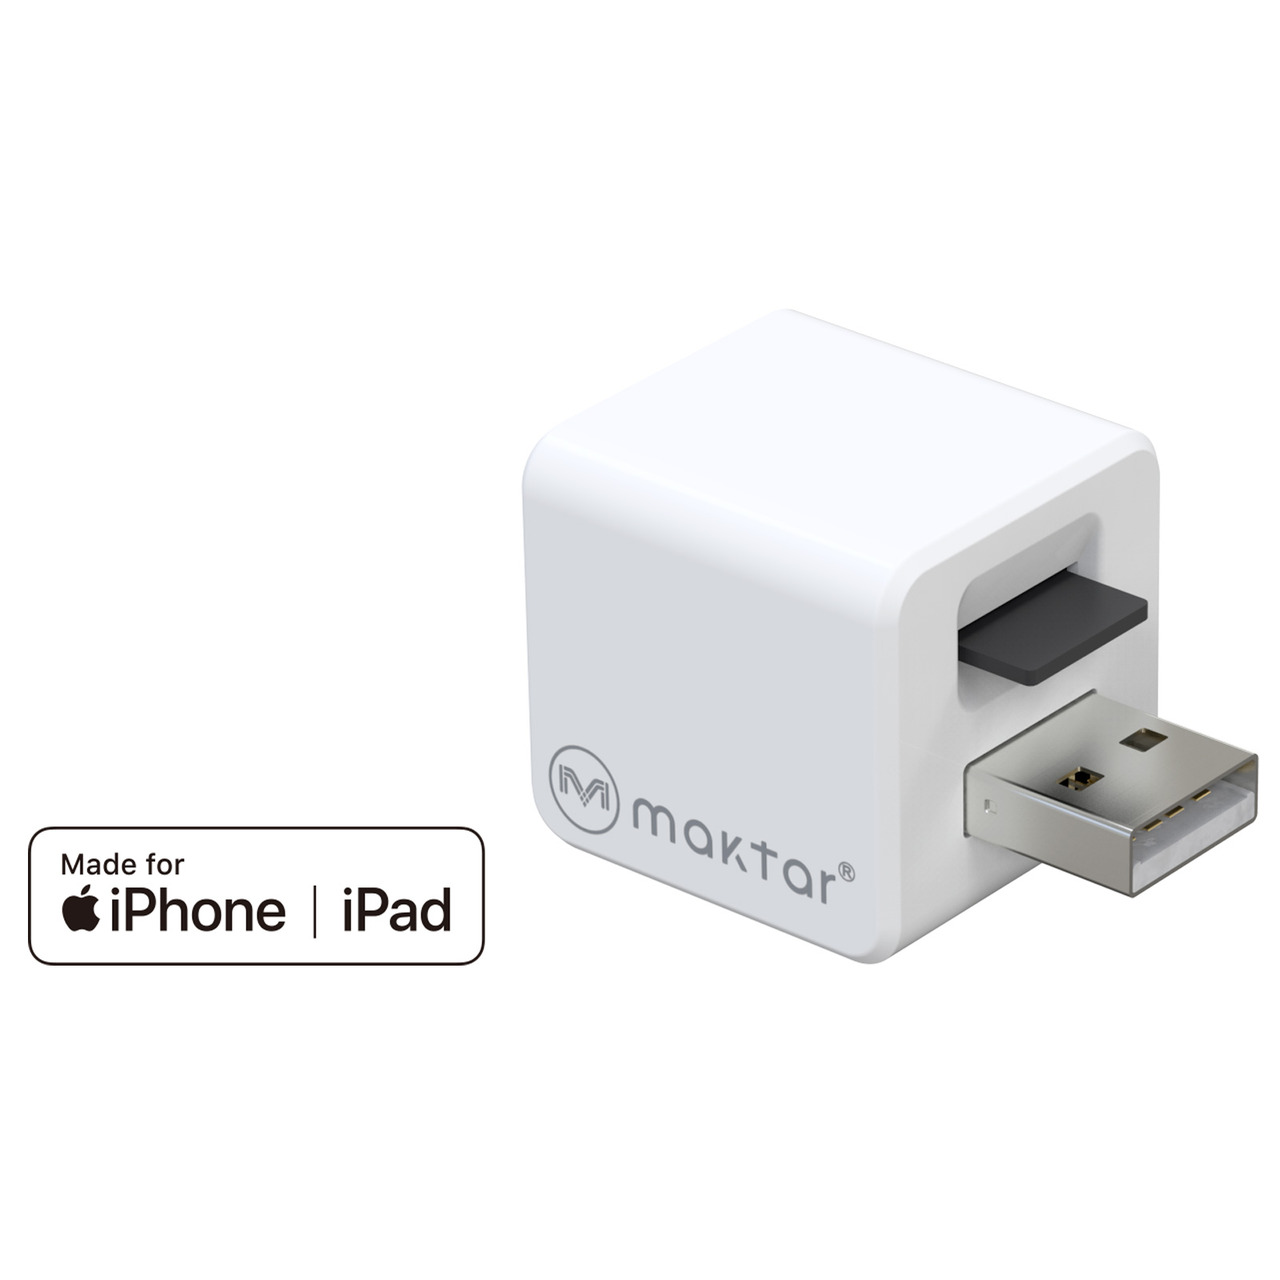 Maktar Auto-Back-up-Adapter Qubii- fr iPhone-iPad- speichert Bilder-Videos-Kontakte auf microSD